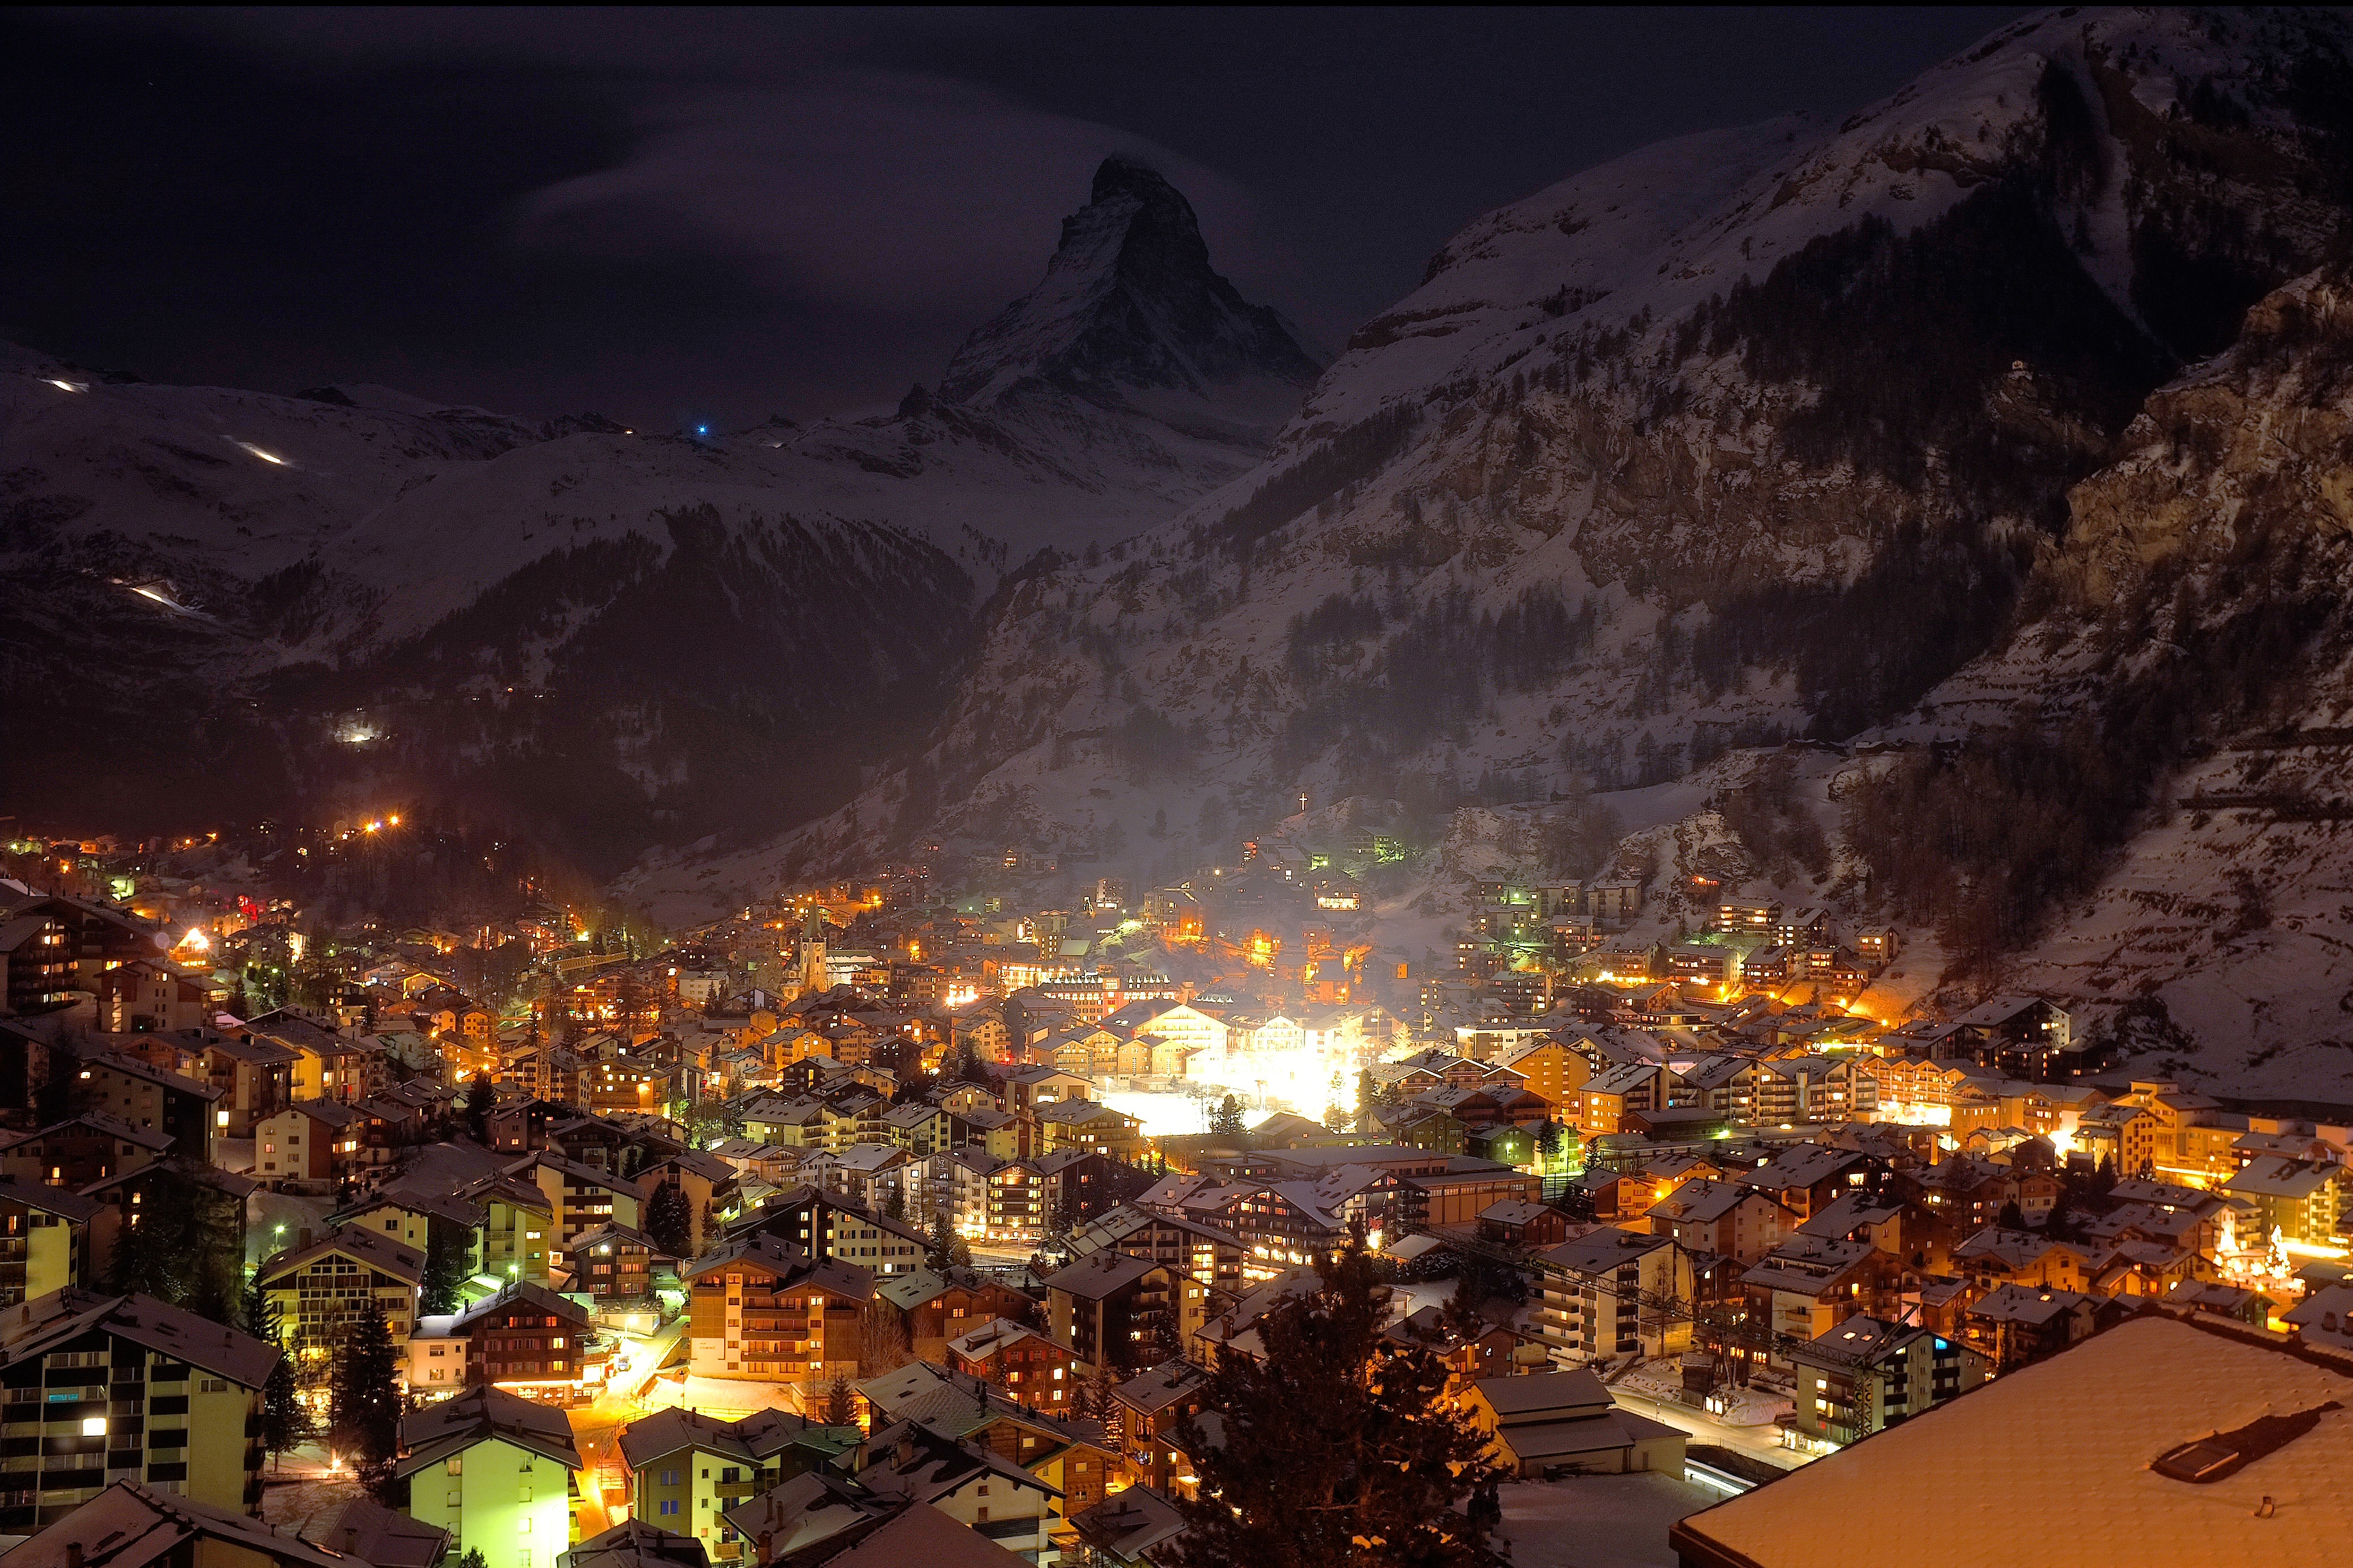 HD desktop wallpaper: Winter, Night, Snow, Mountain, Light, House, Alps,  Village, Switzerland, Valley, Man Made download free picture #1526109